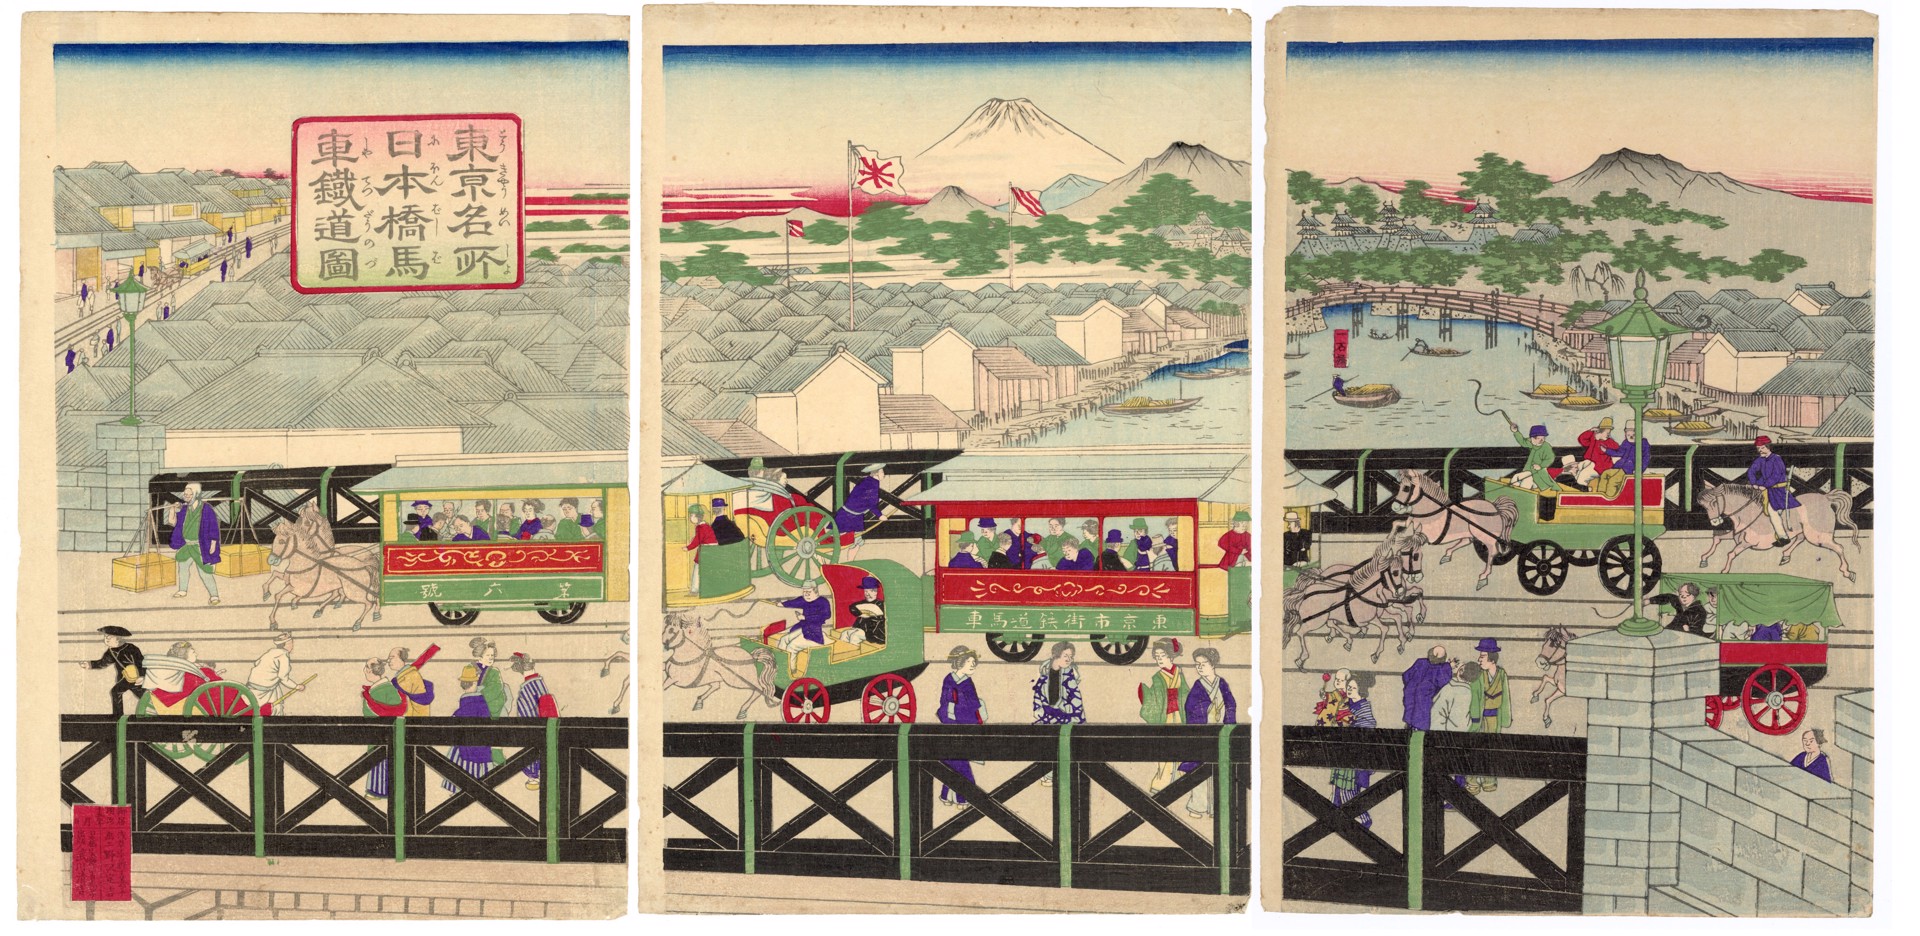 Carriages and Railroads at Nihonbashi by Shigekiyo